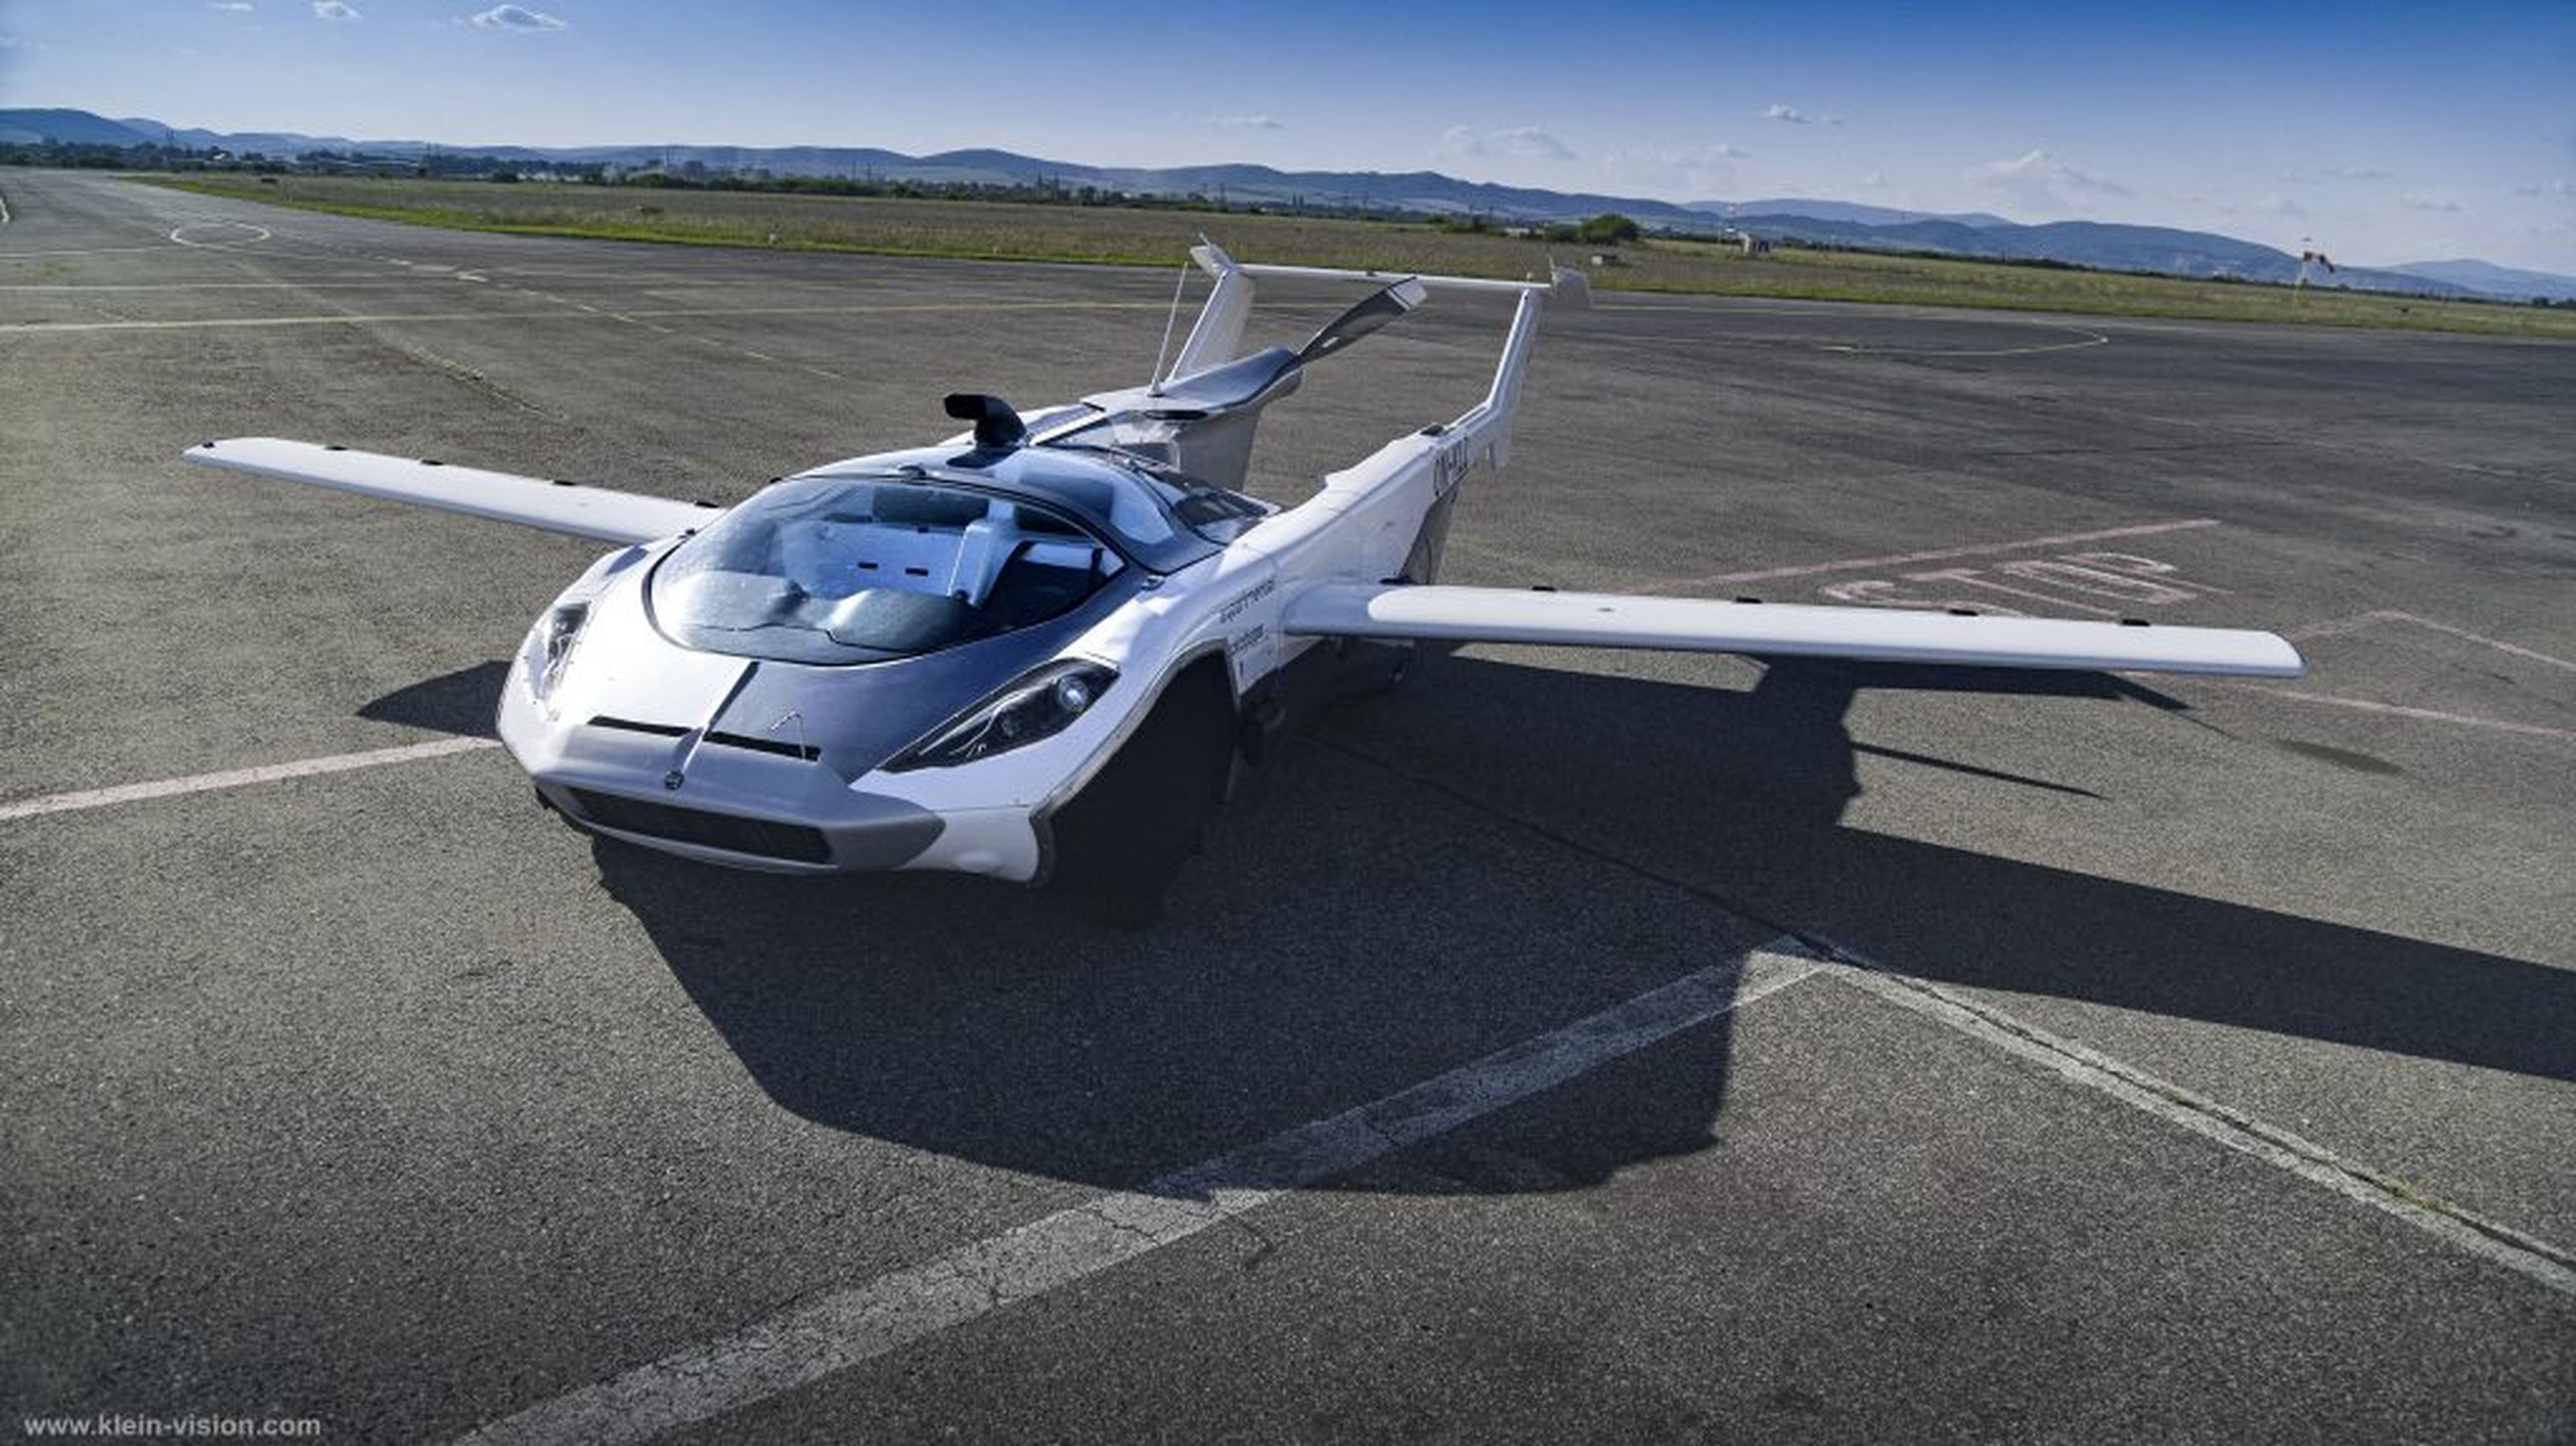 Modelo de Air Car, coche volador desarrollado por Klein Vision.